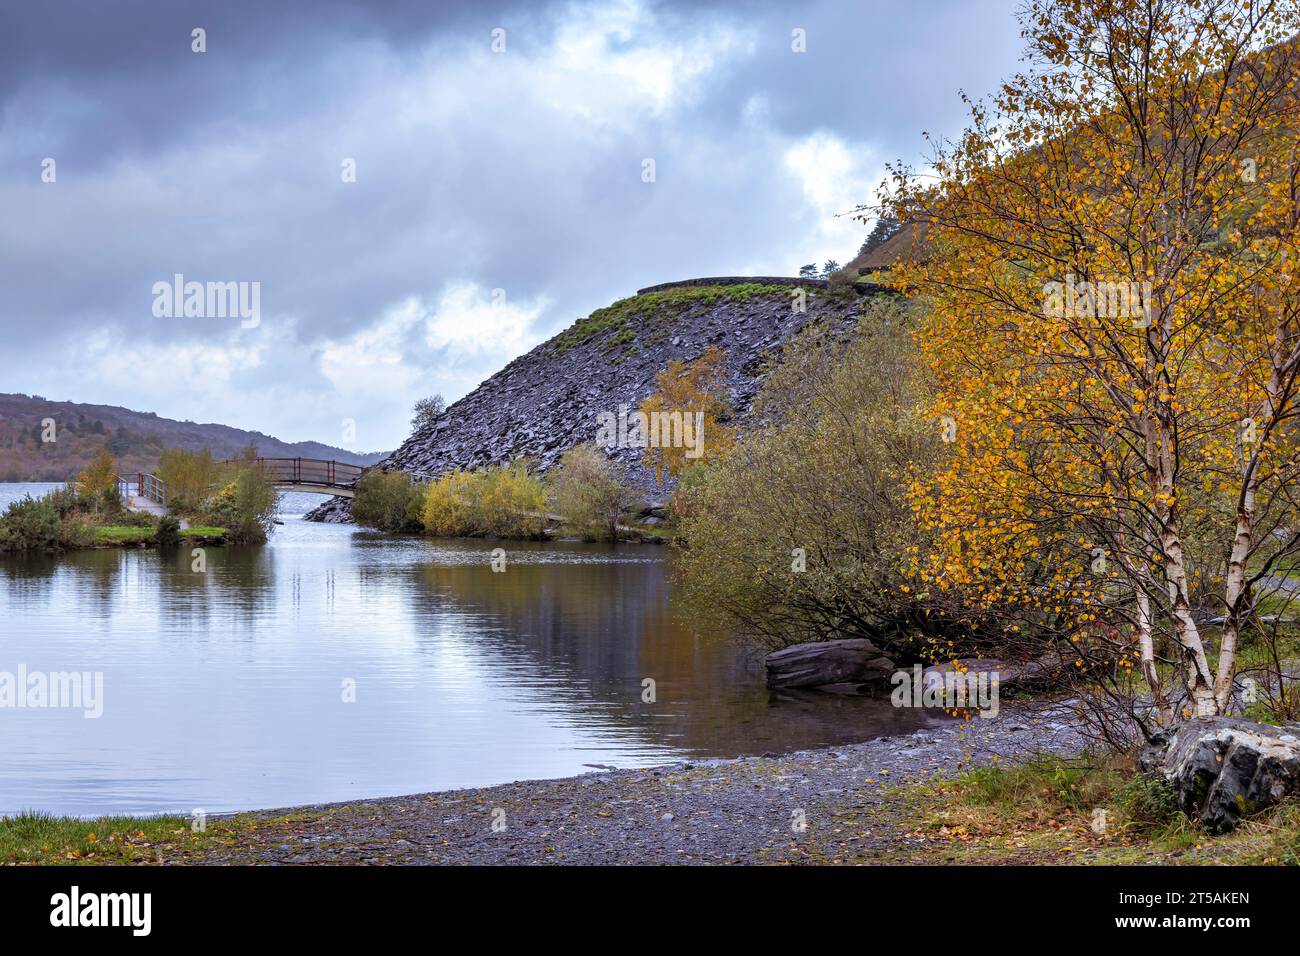 Les rives de Llyn Padarn près de Llanberis à Gwynedd, parc national de Snowdonia, pays de Galles du Nord. Banque D'Images